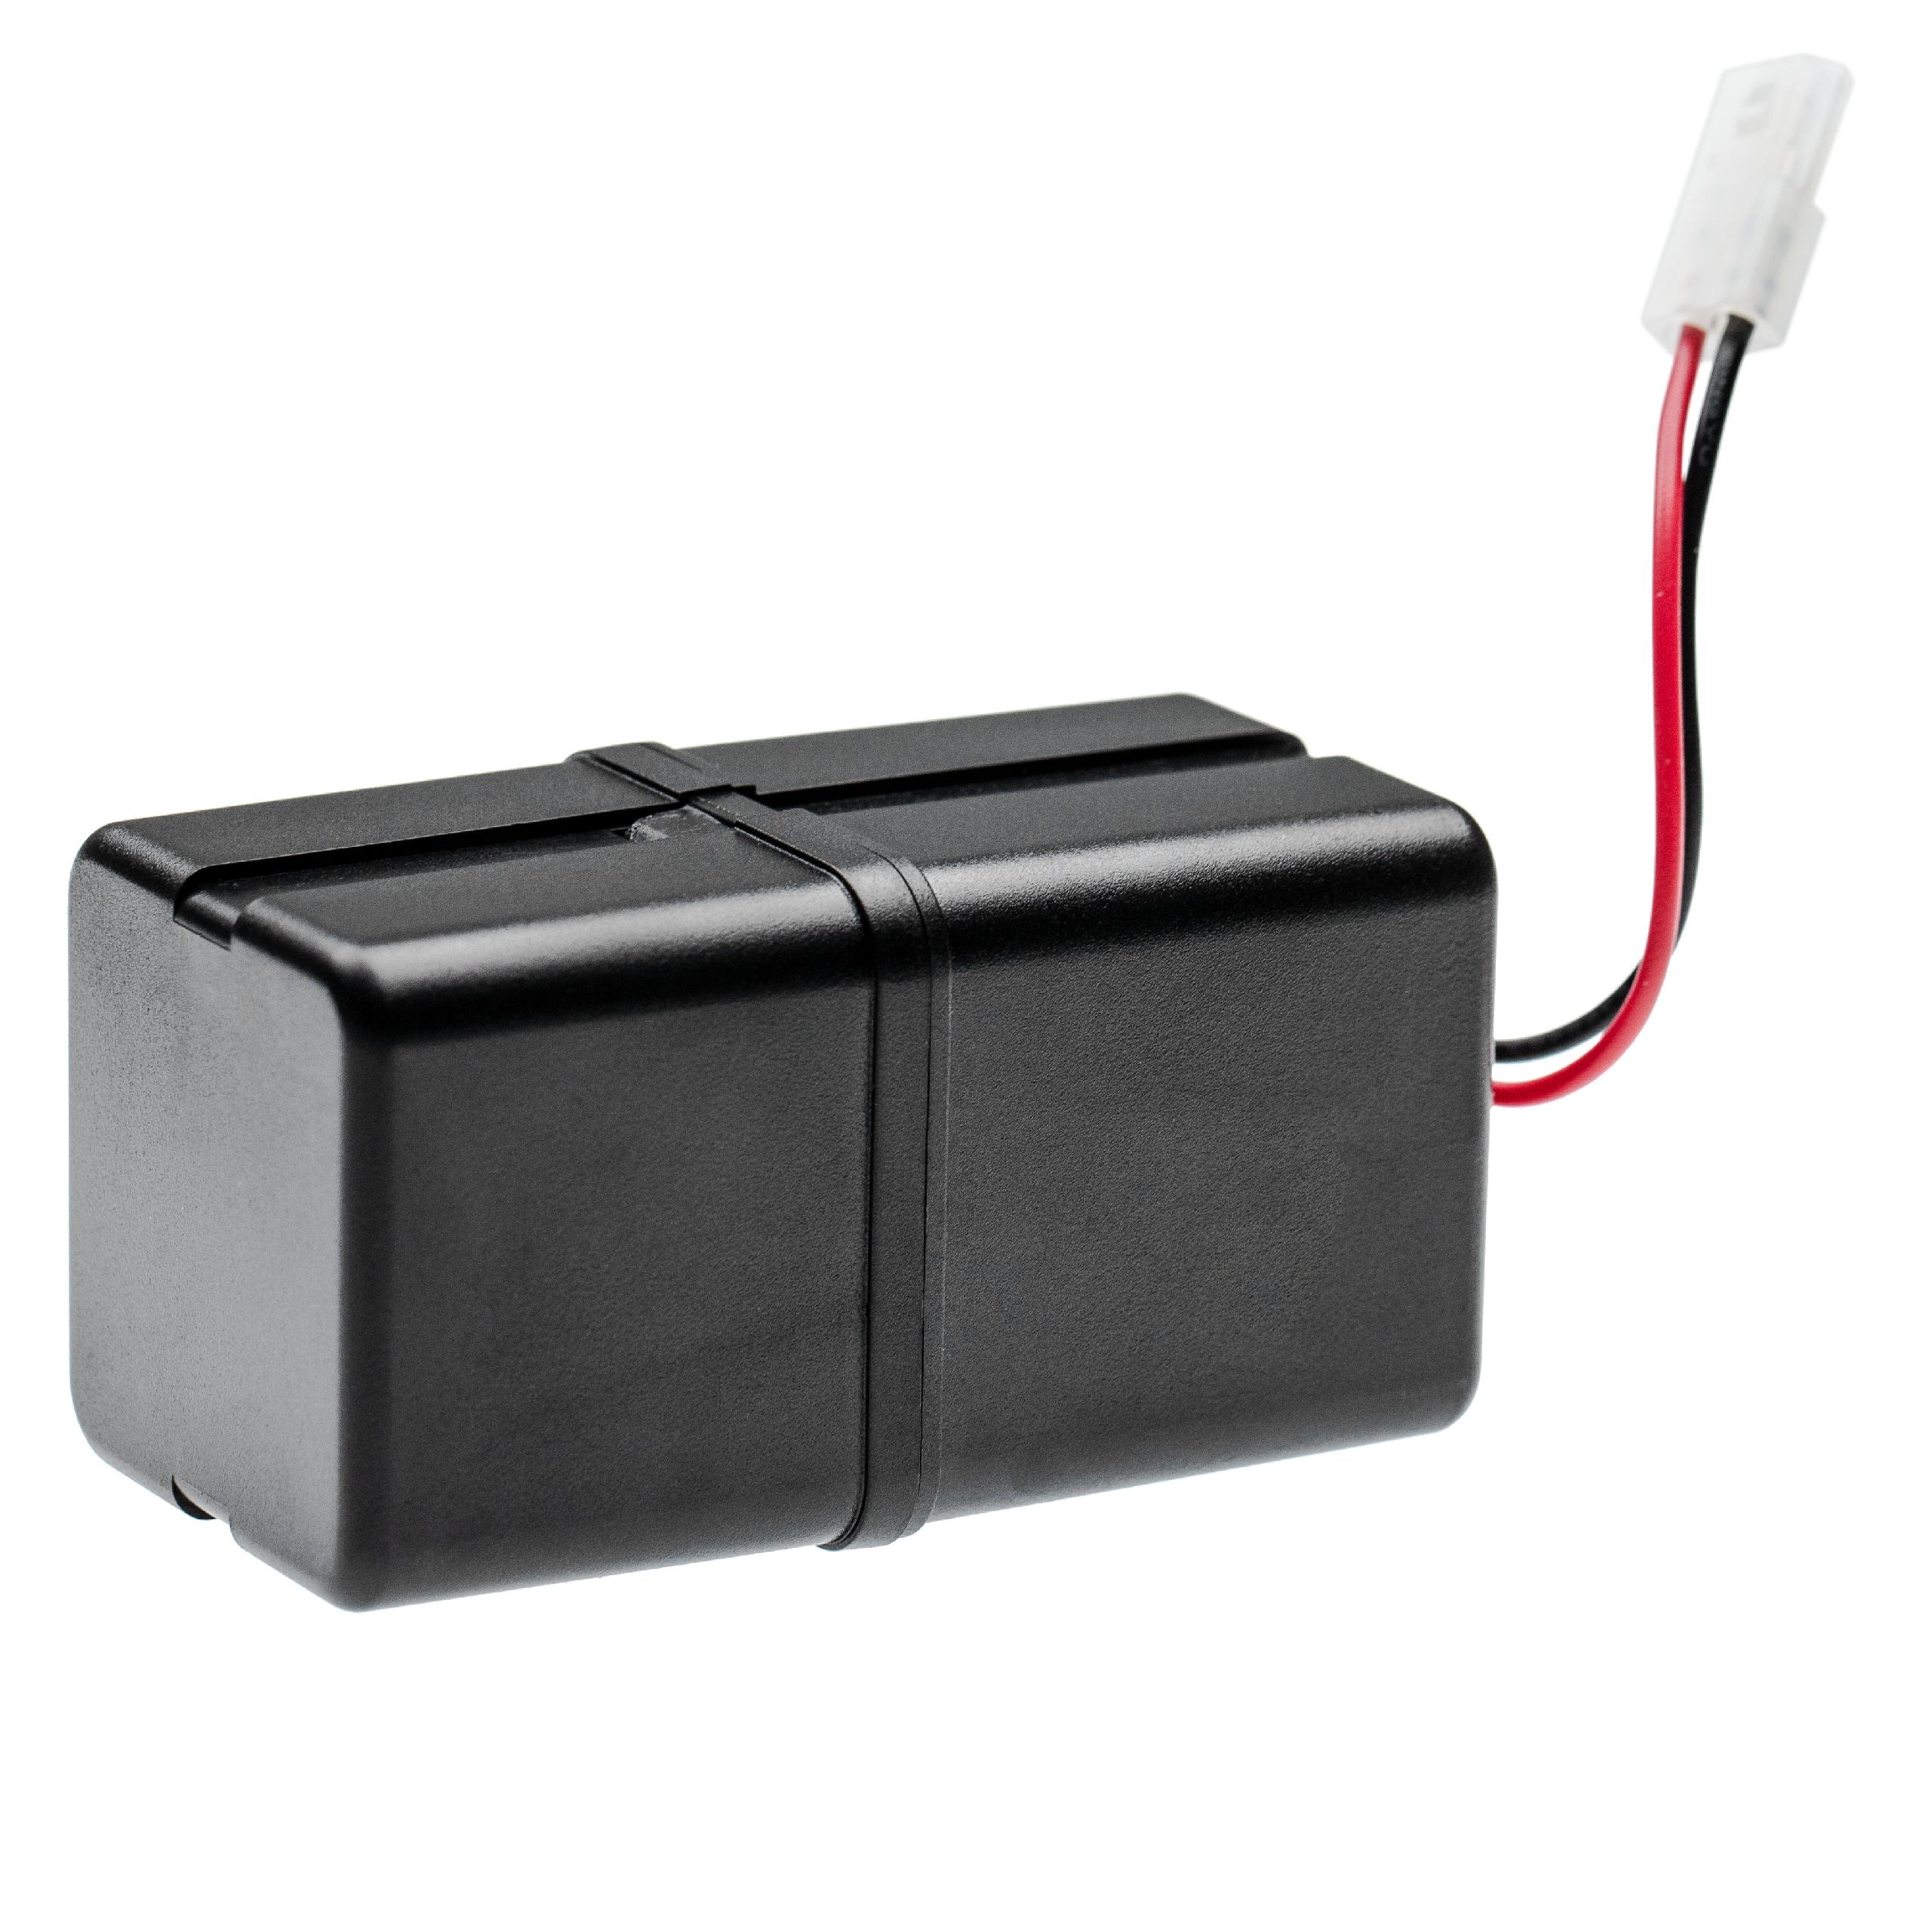 Akumulator do odkurzacza zamiennik bObsweep E14040401505a - 2600 mAh 14,8 V Li-Ion